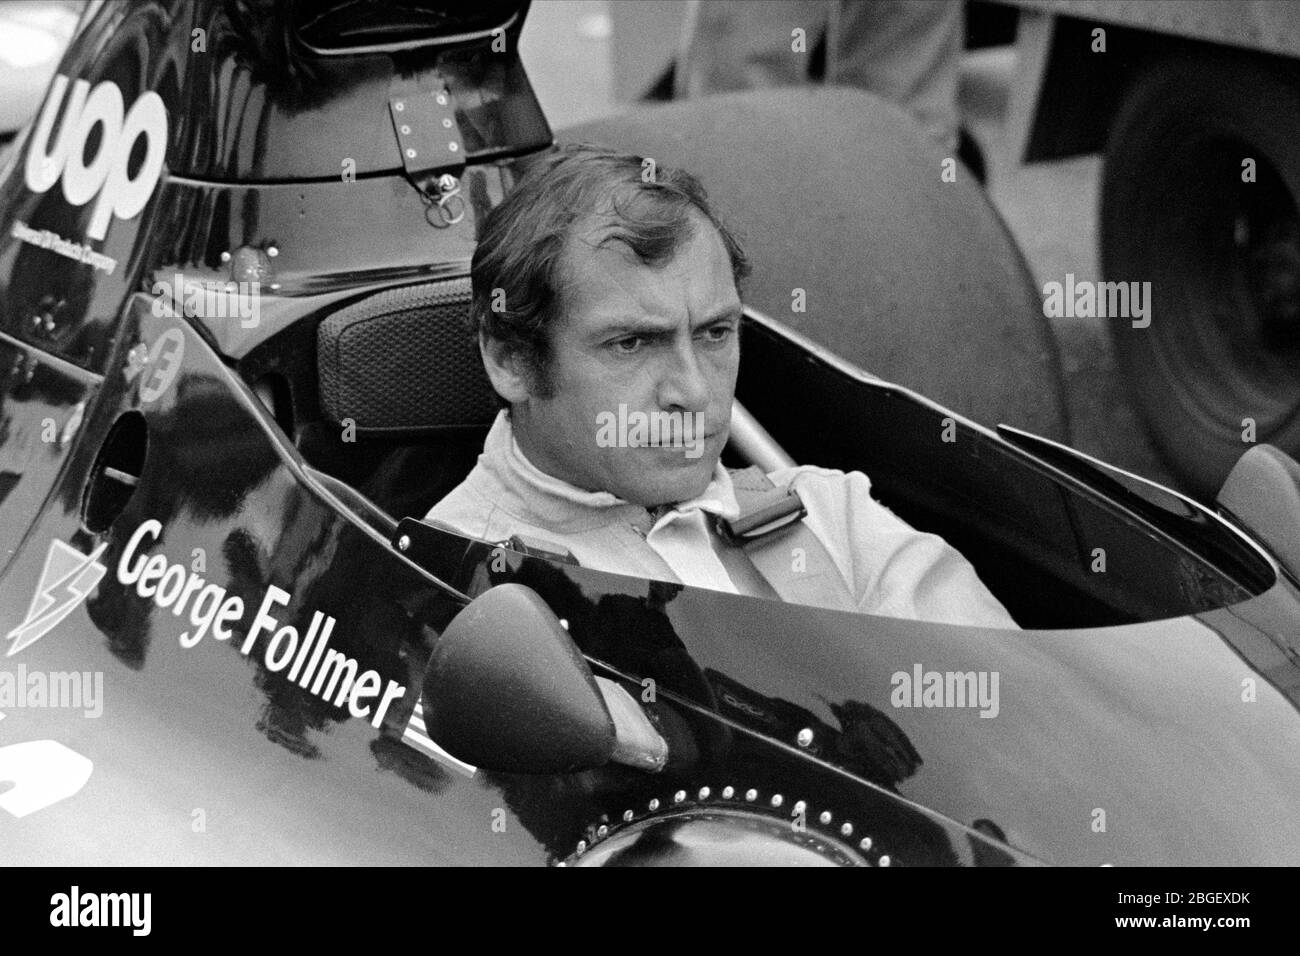 George Follmer 1973 John Player British Grand Prix Stock Photo